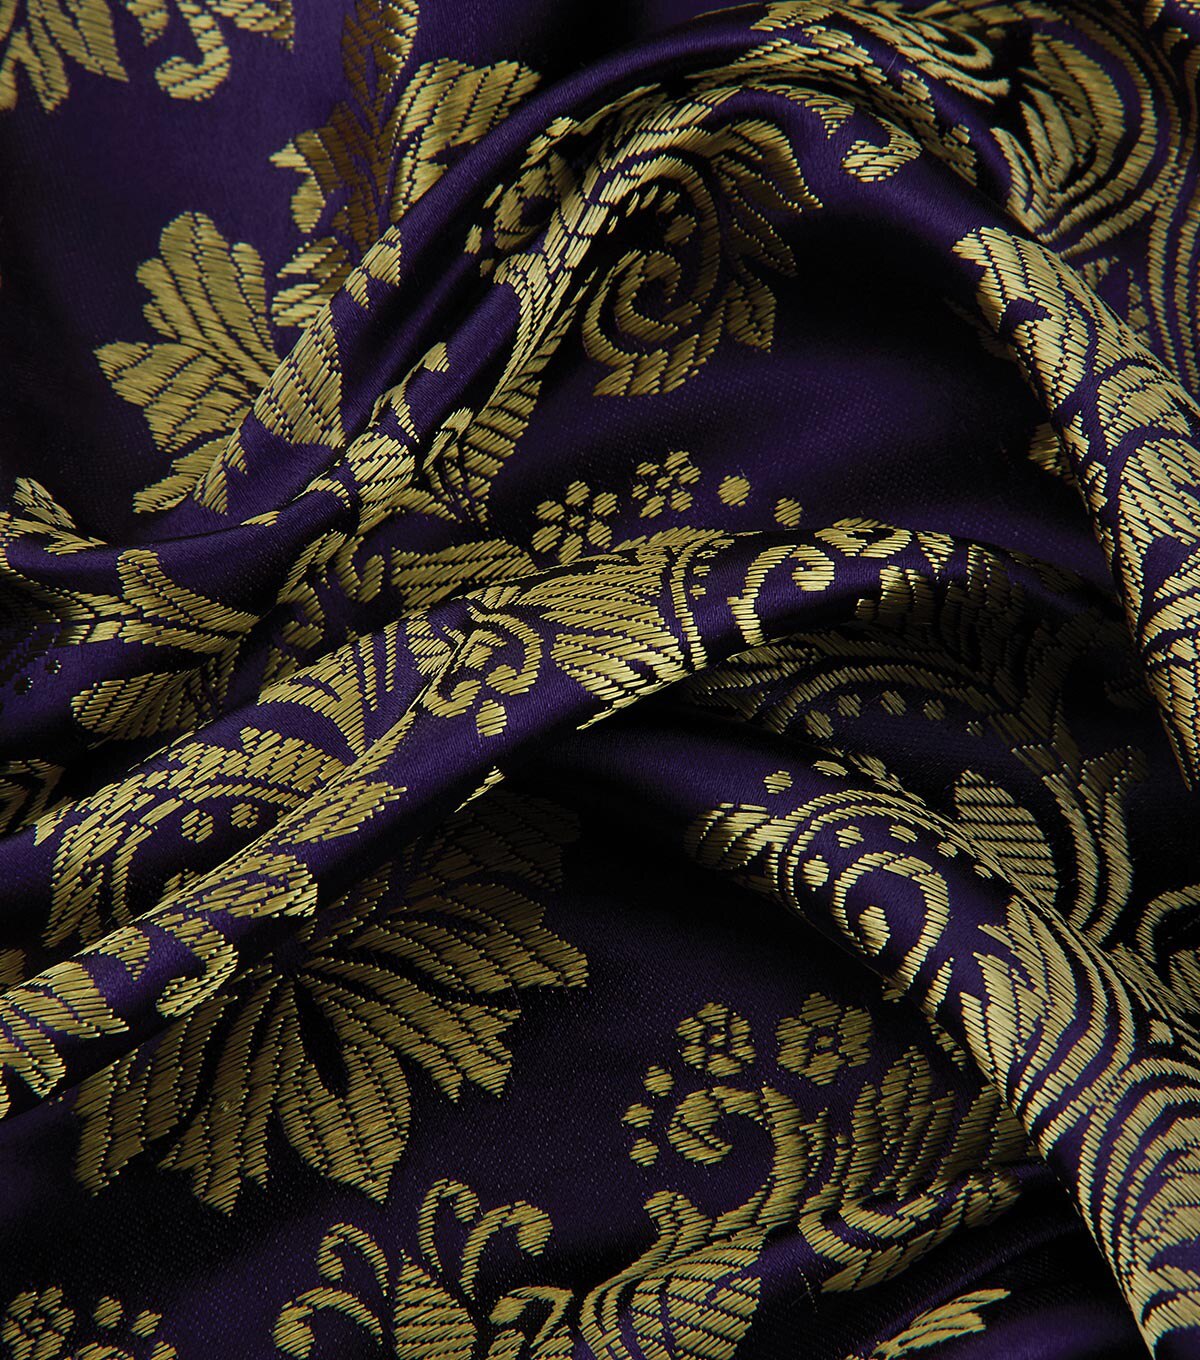 Yaya Han Regal Brocade Purple | JOANN